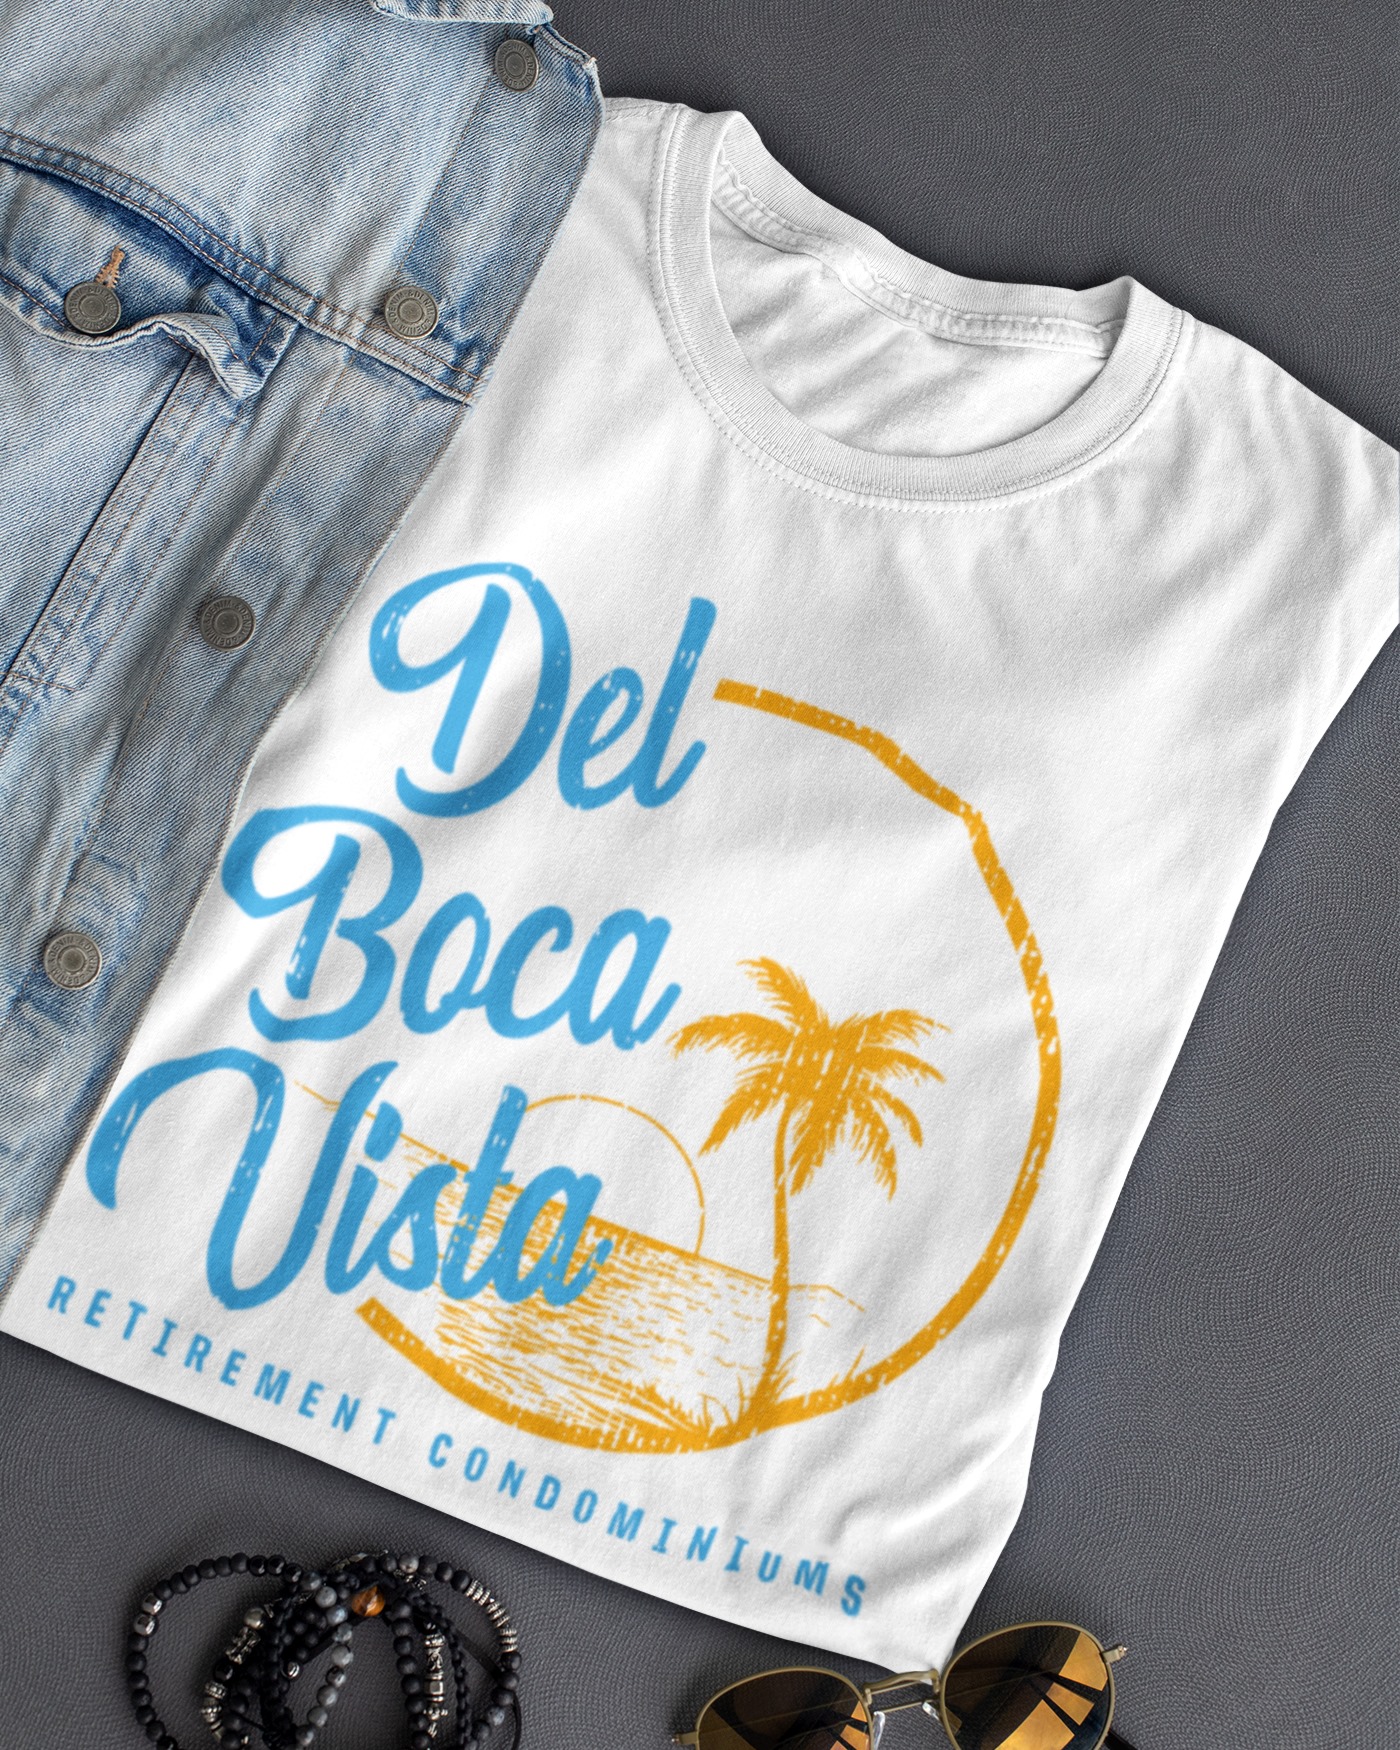 Del Boca Vista rirement condominiums - Coconut and beach